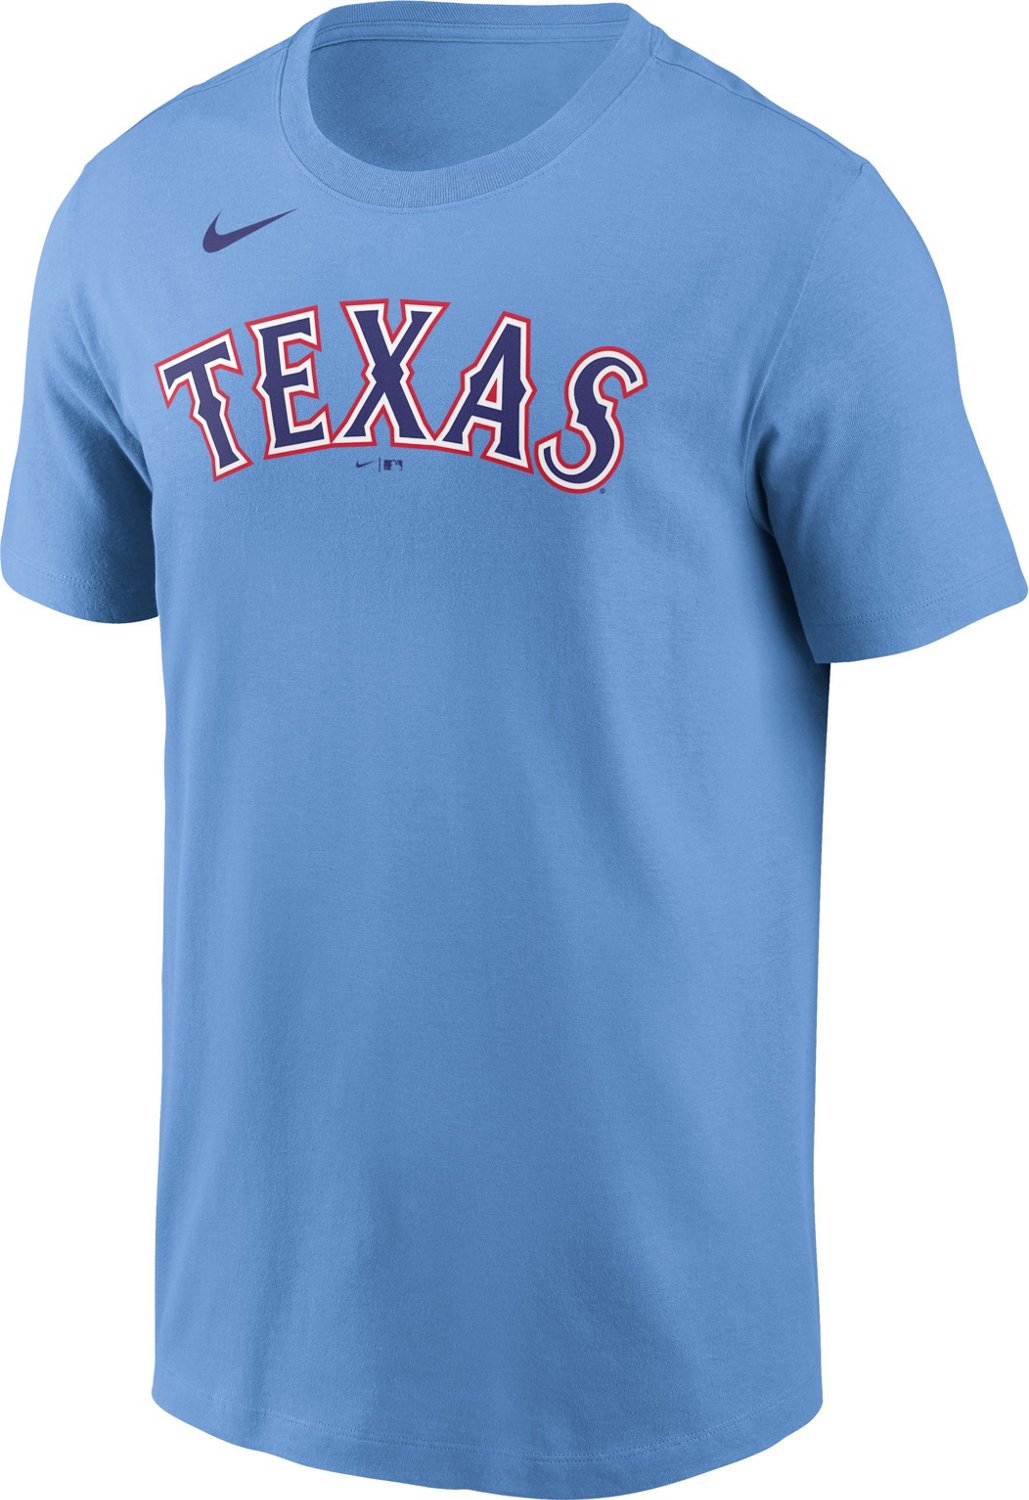 Nike Men's Texas Rangers Wordmark Short Sleeve T-shirt | Academy